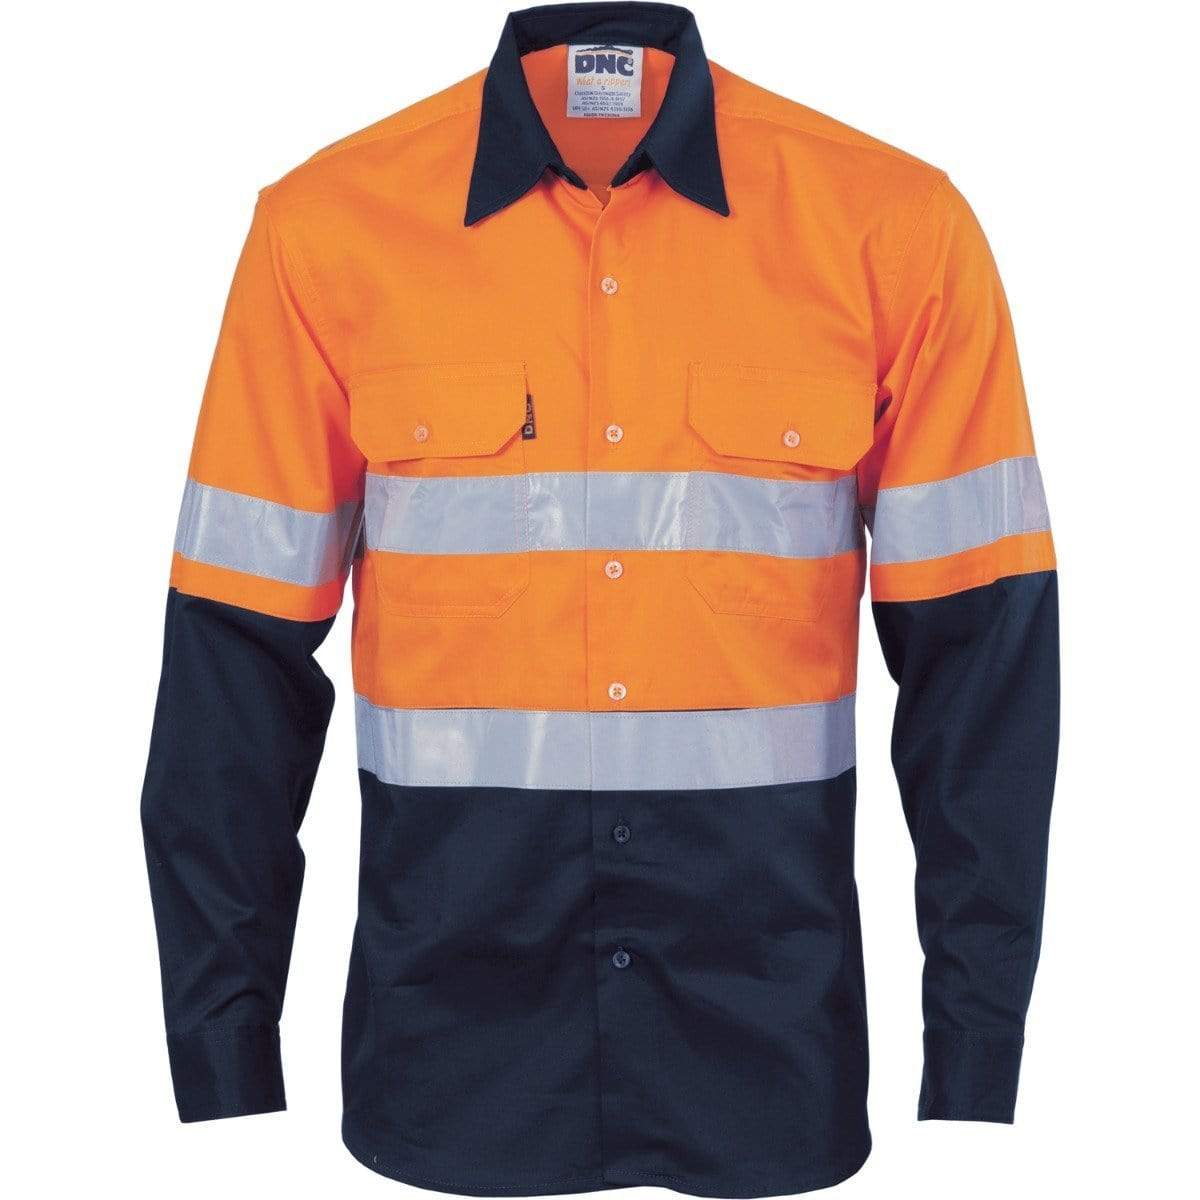 Dnc Workwear Hi-vis Cool-breeze Vertical Vented Long Sleeve Cotton Shirt With Generic Reflective Tape - 3984 Work Wear DNC Workwear Orange/Navy XS 